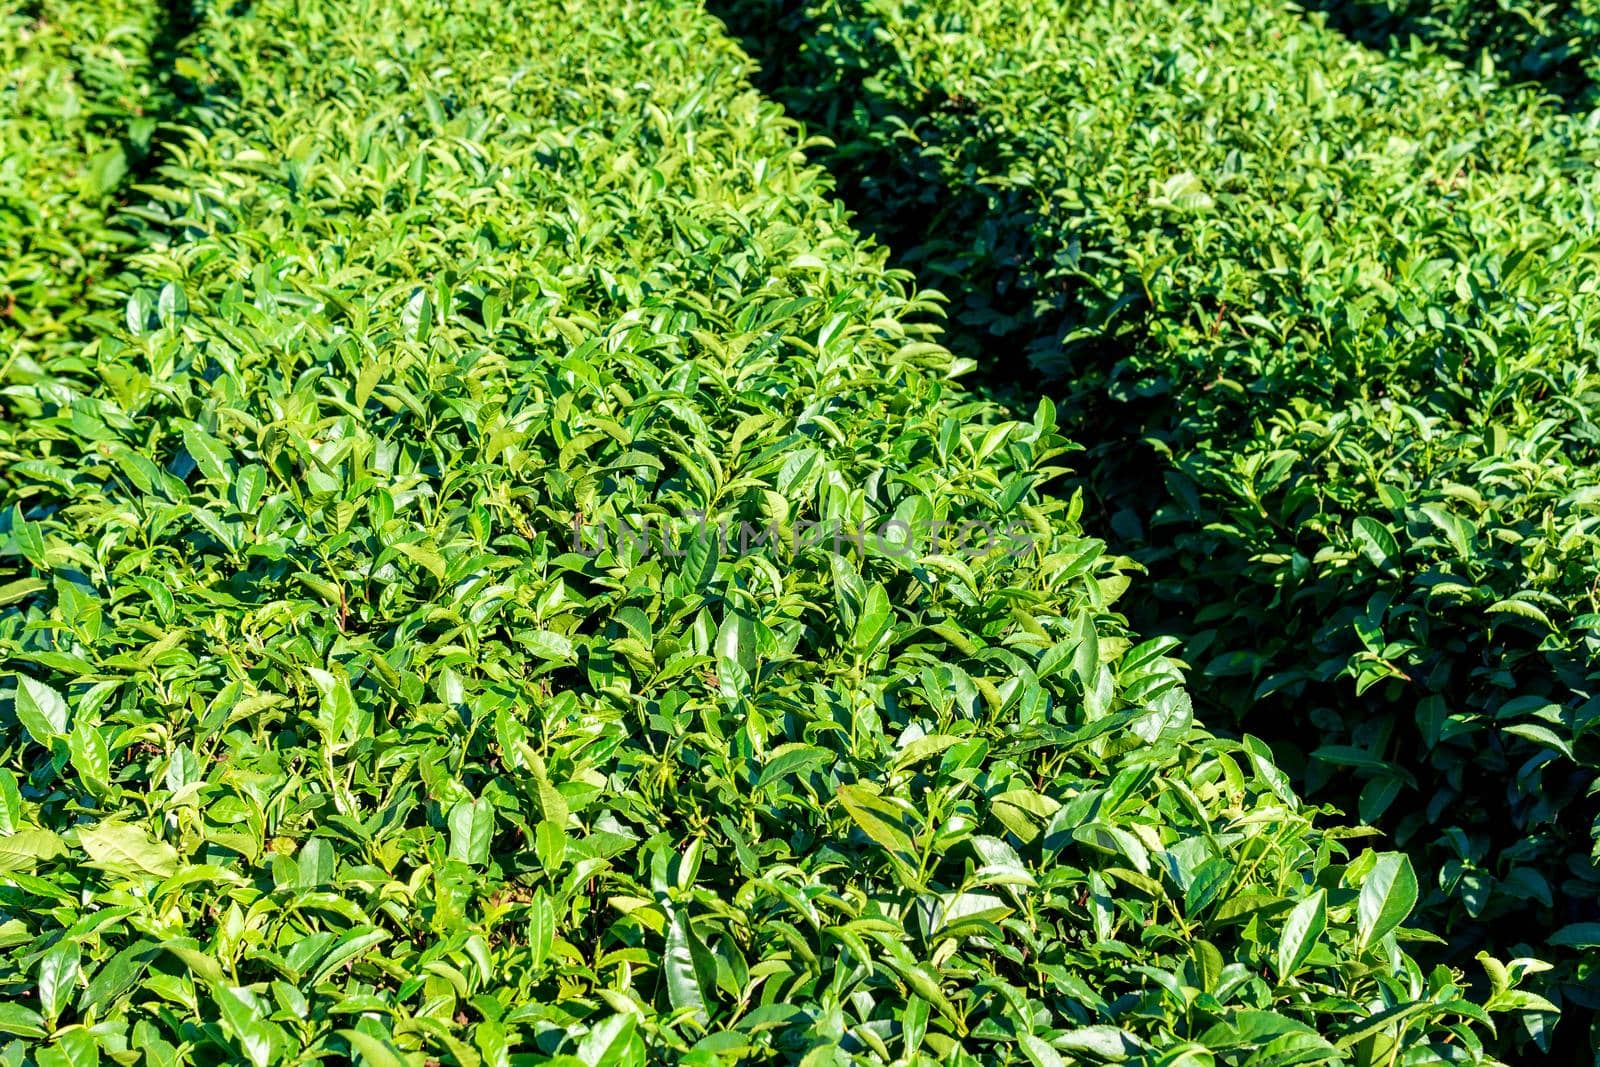 Green tea plantation natural background. Tea cultivation, harvest in autumn